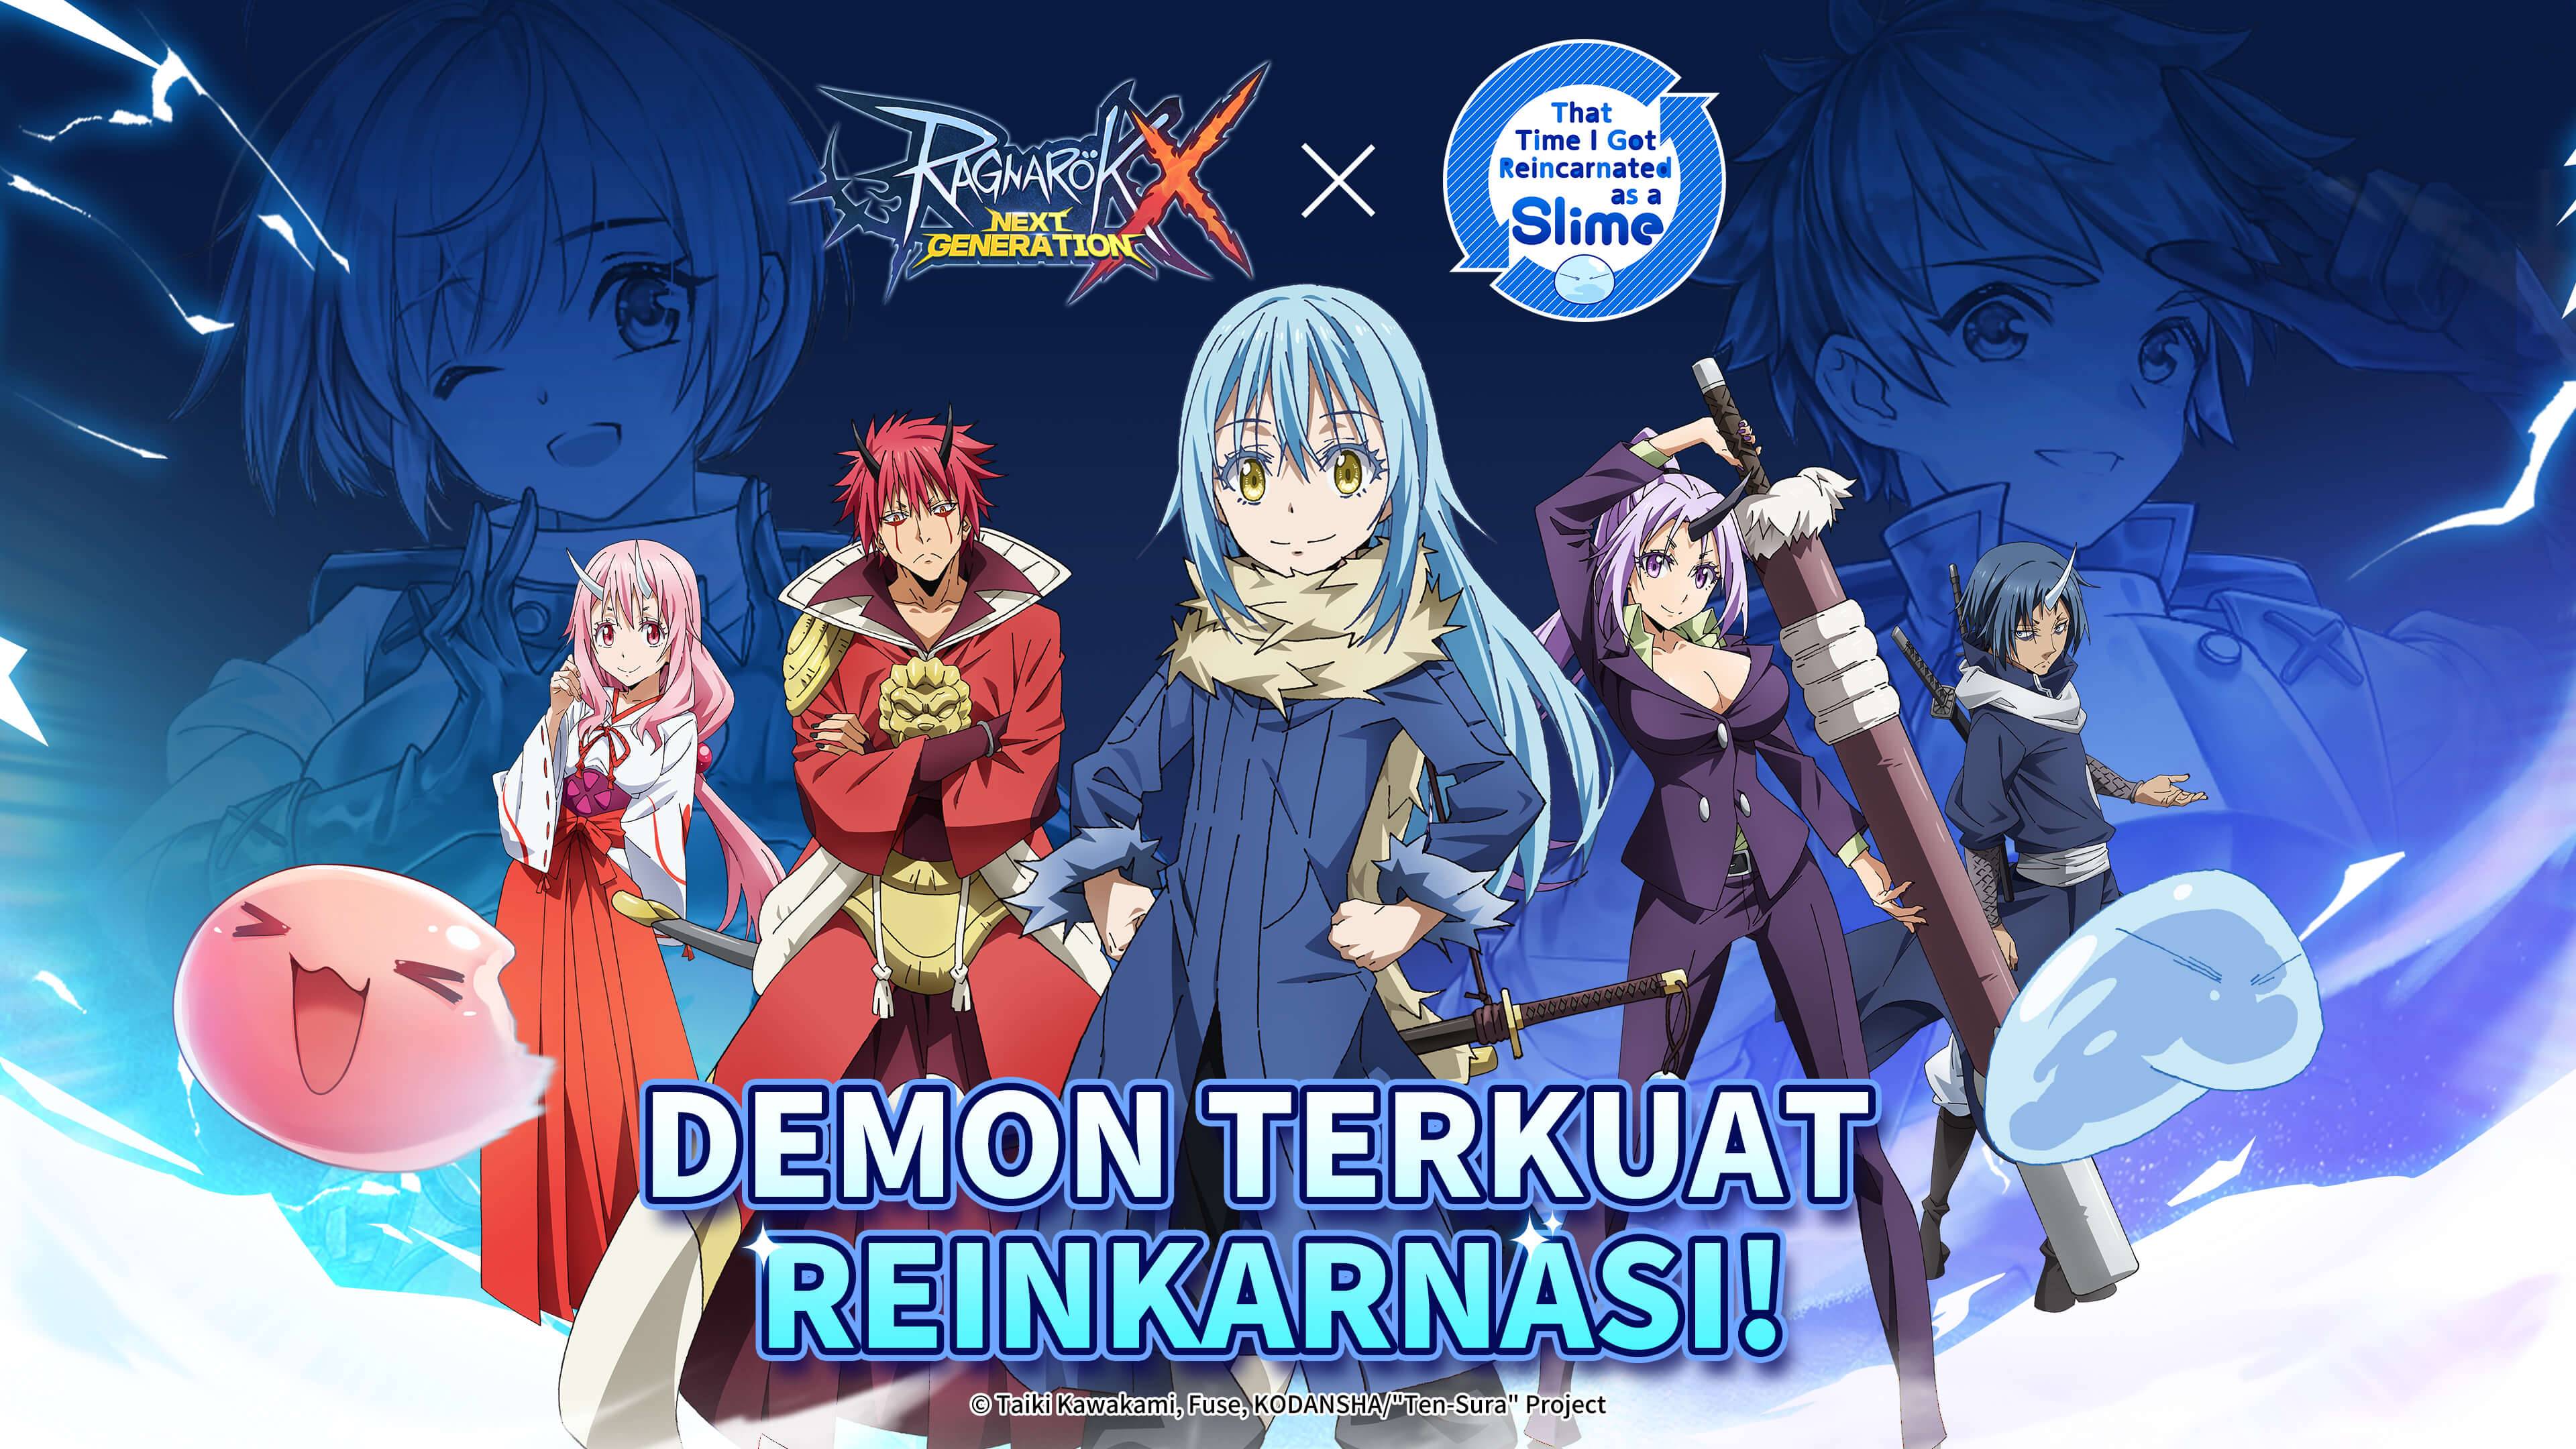 Kolaborasi Ragnarok X: Next Generation Dengan Anime Populer “That Time I Got Reincarnated as a Slime” Kini Sudah Hadir!